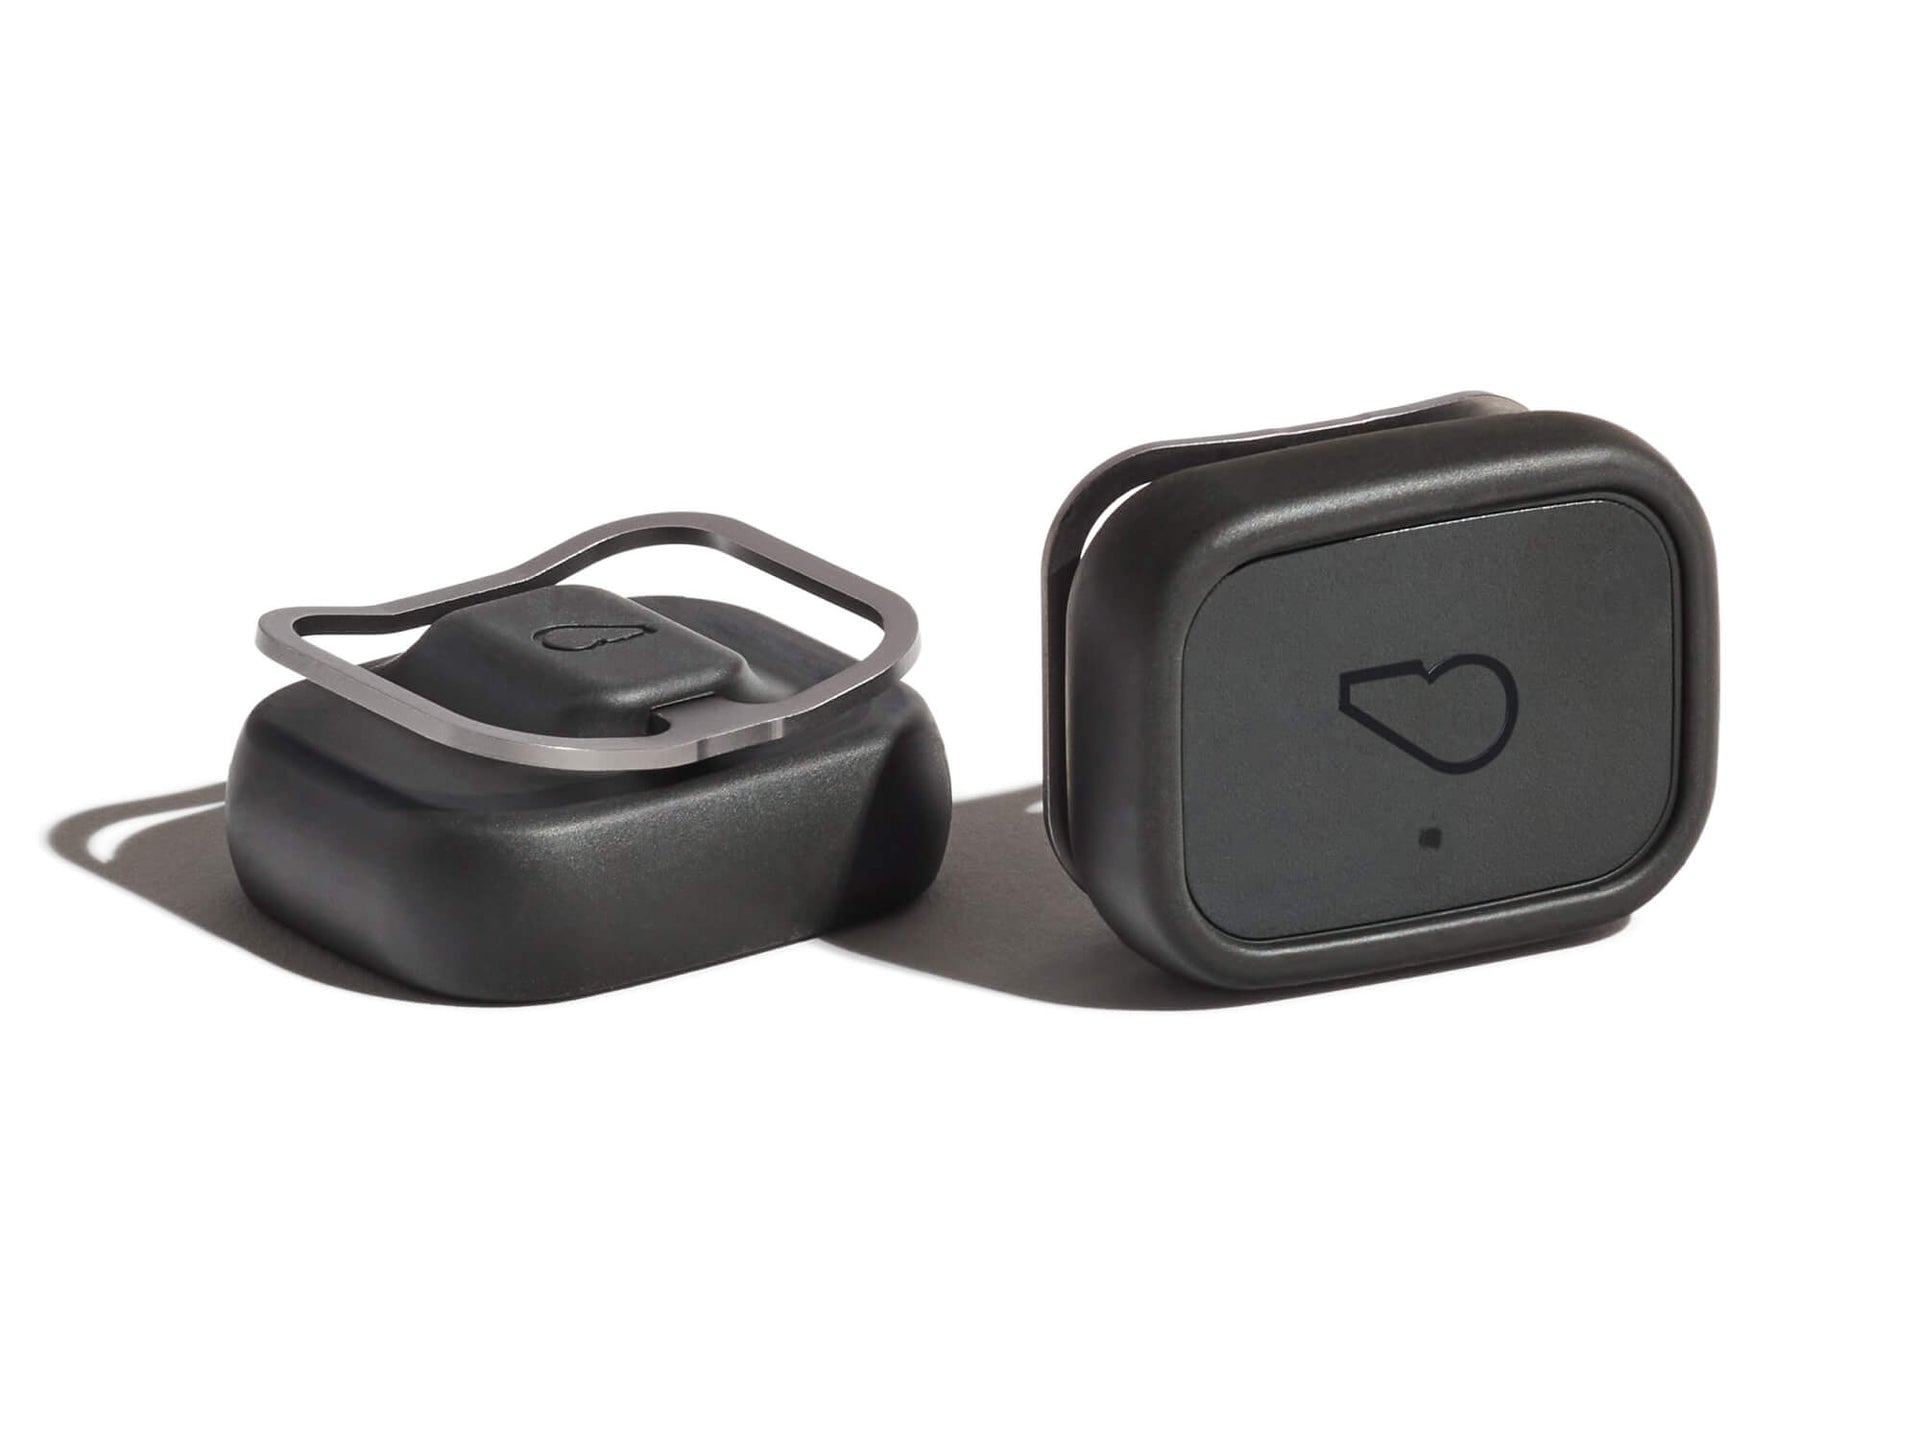 Whistle Health 2.0 Smart Device - Black + Brushed Metal